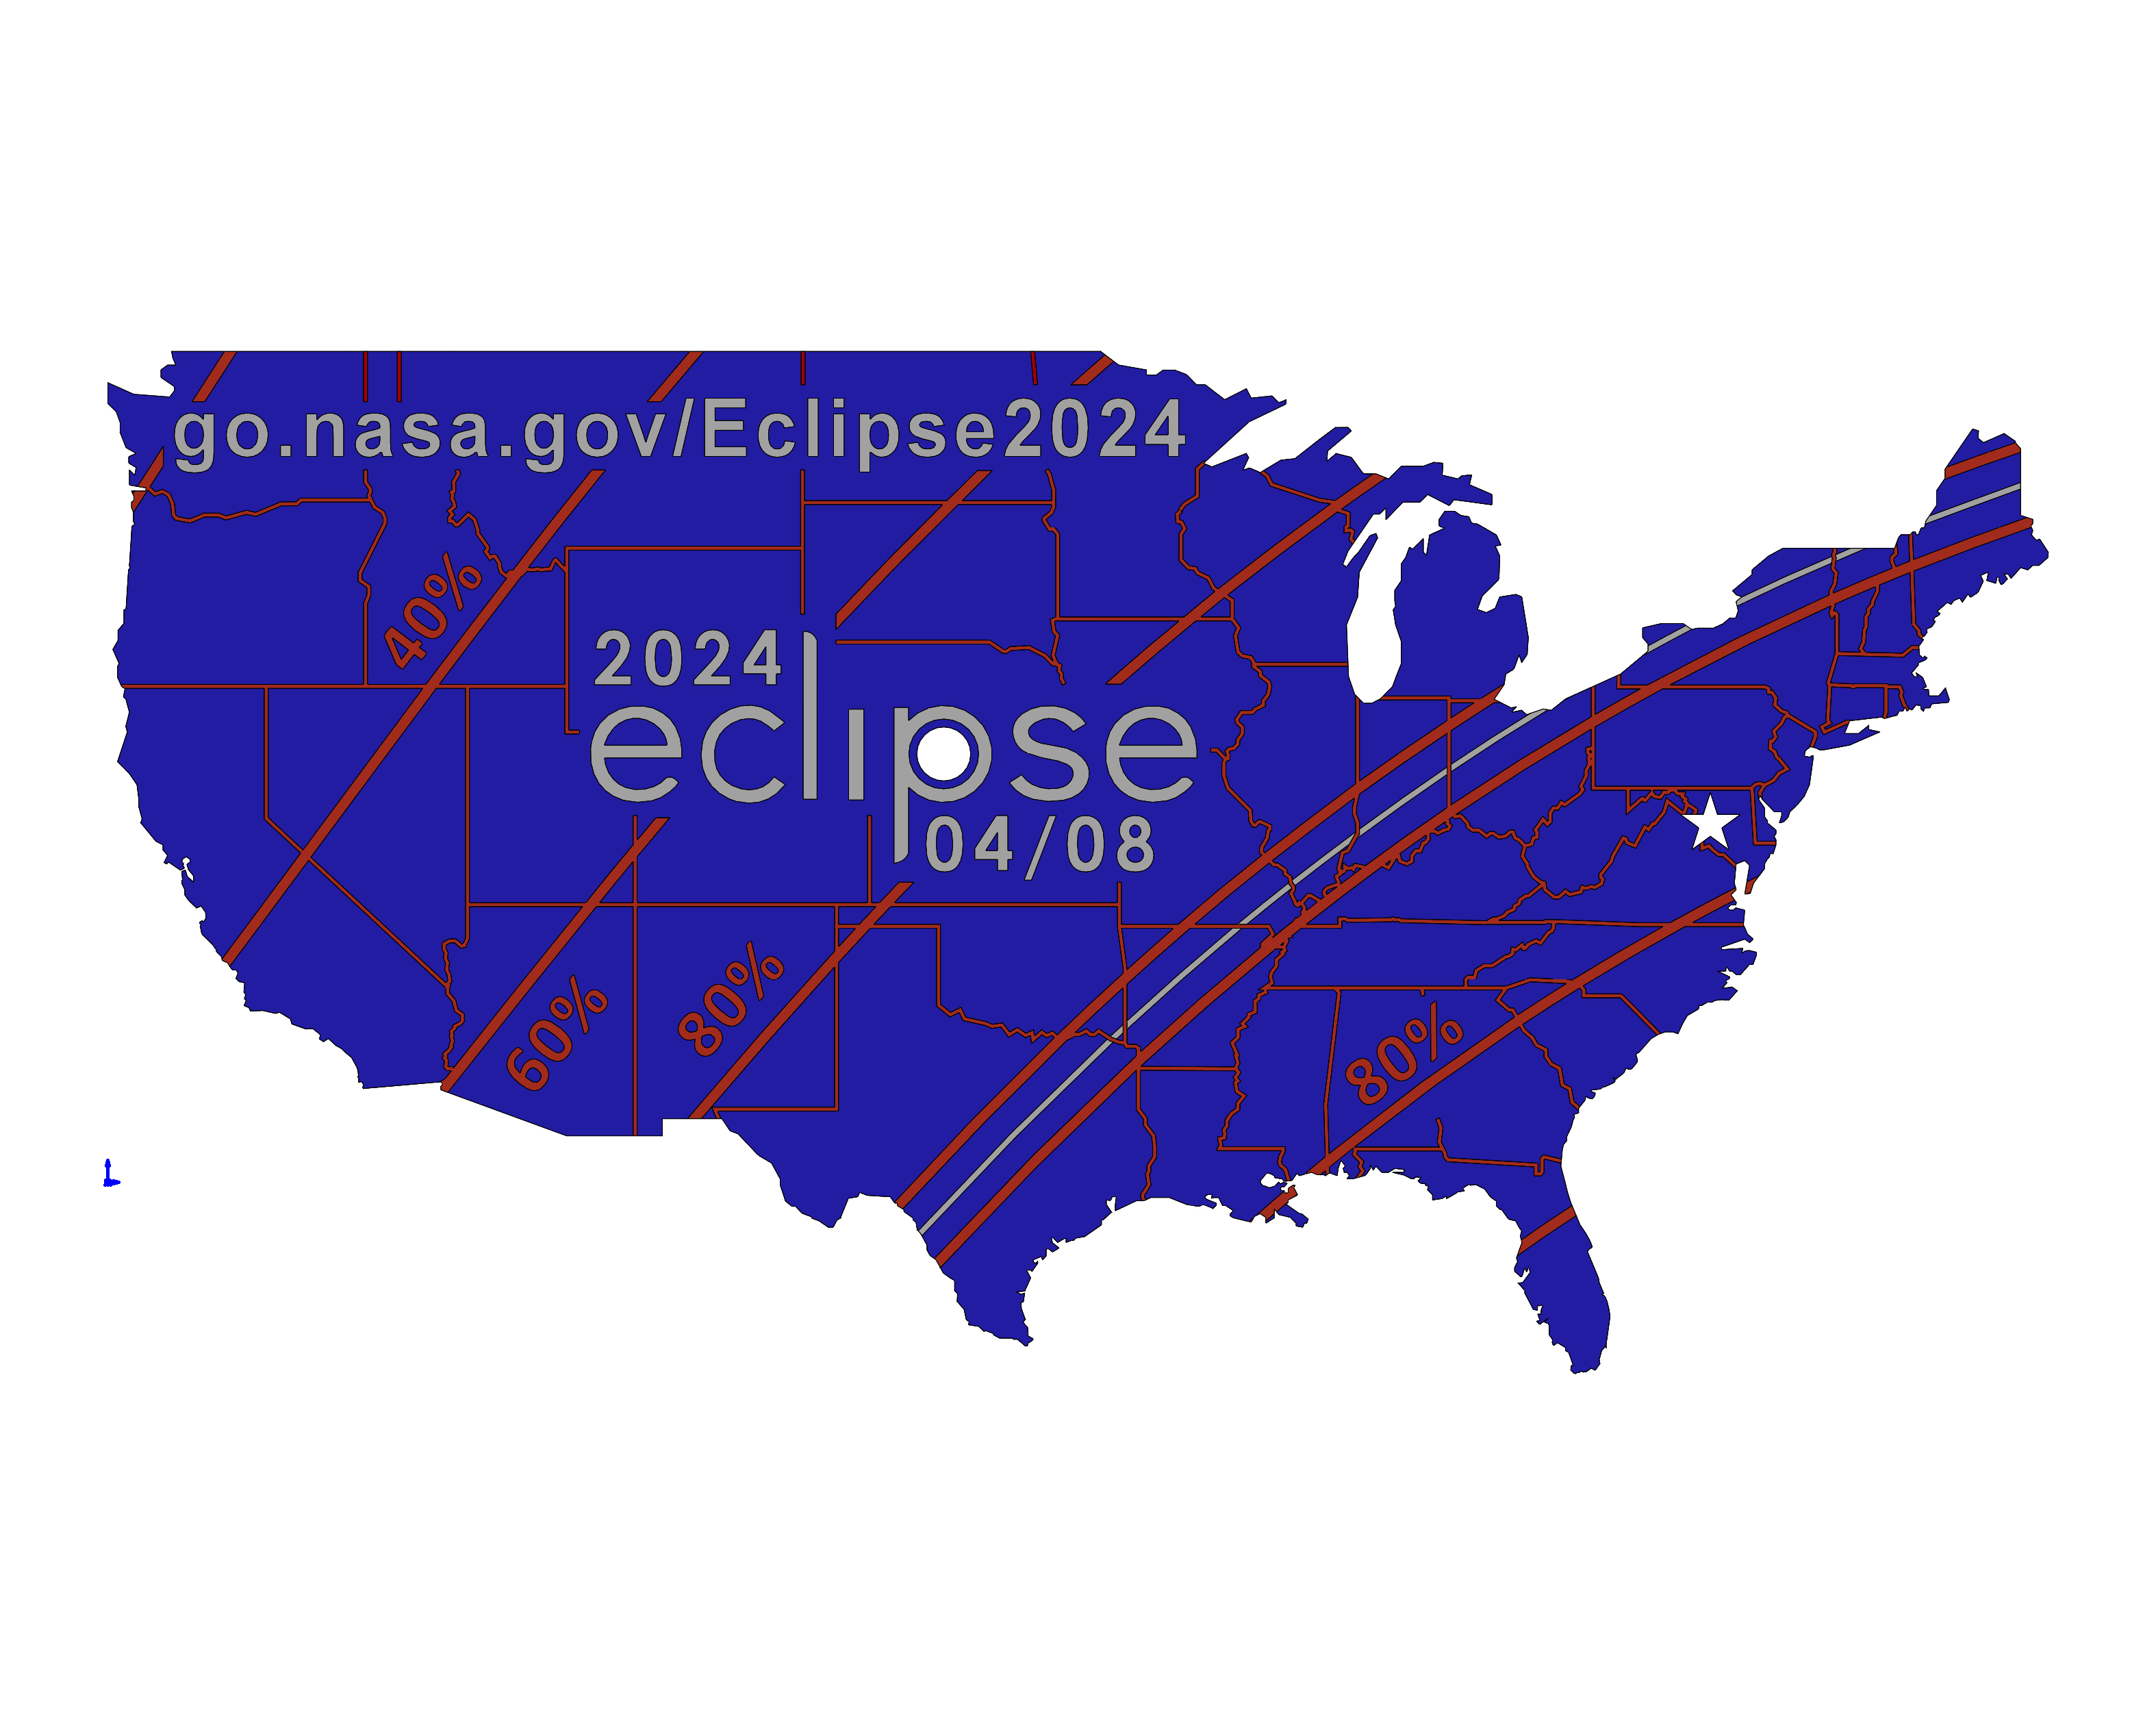 2024 Total Solar Eclipse - USA Map - NASA Pinhole Projector